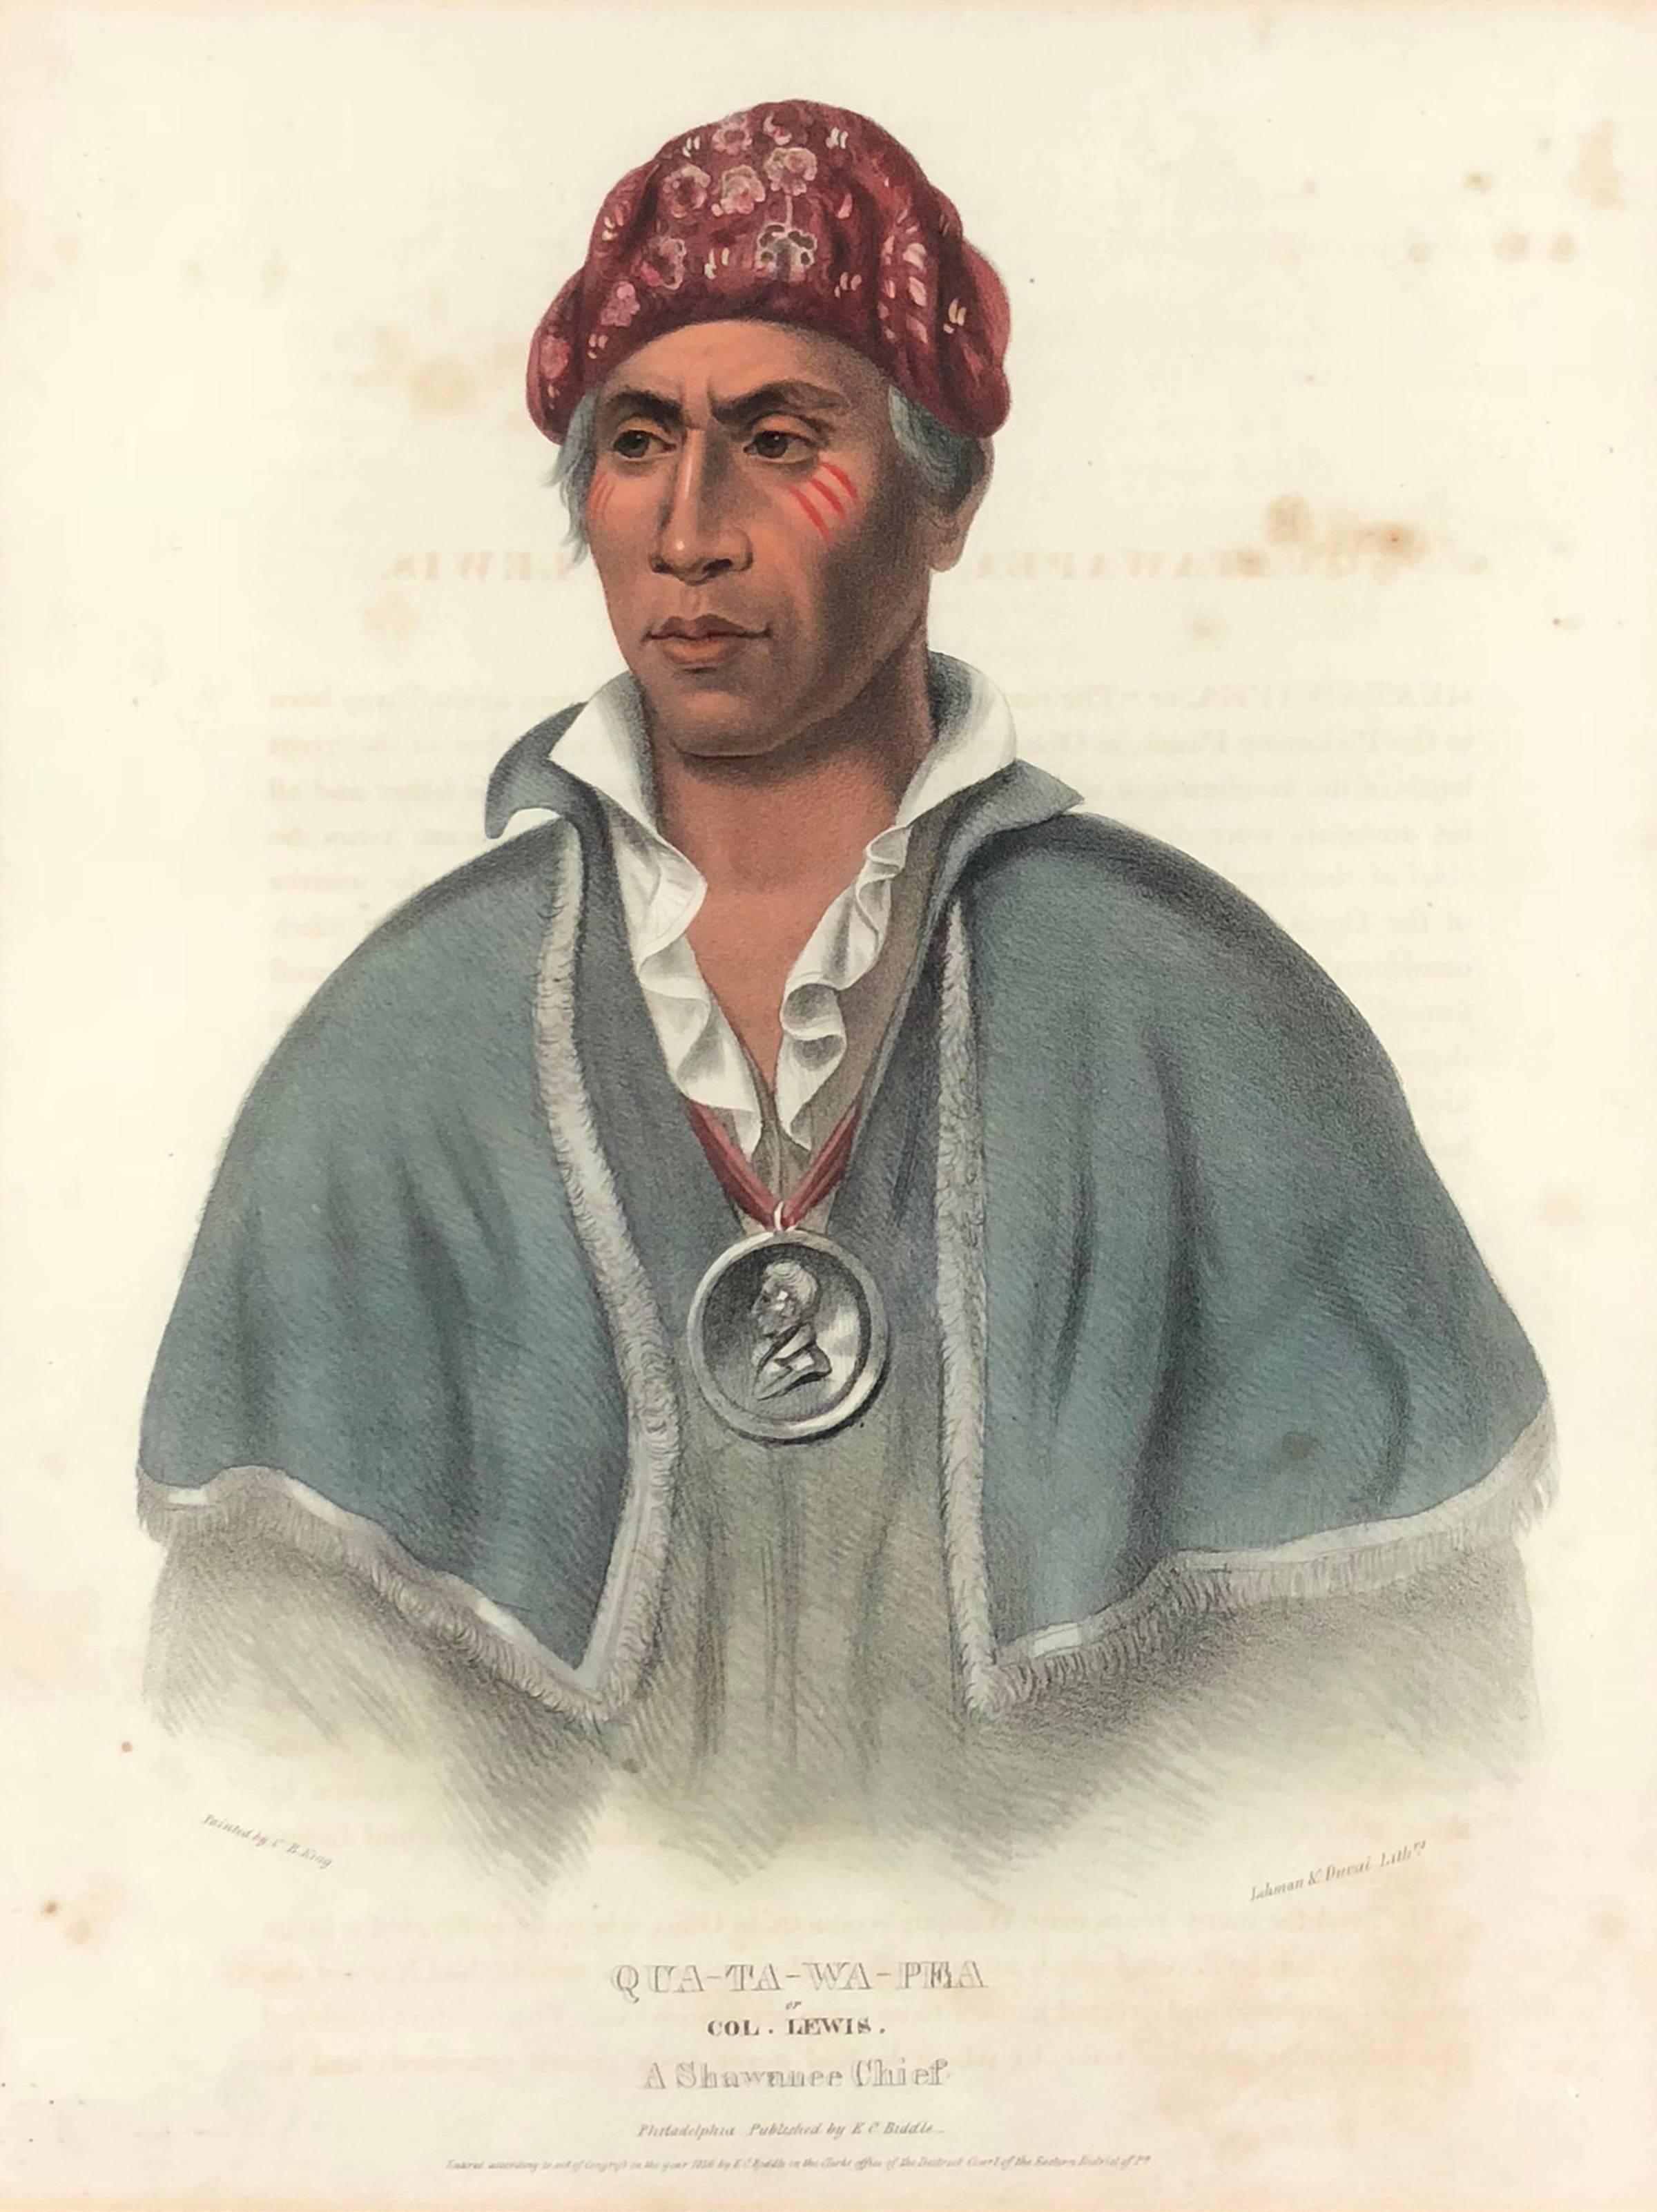 McKenney & Hall Portrait Print - Qua-Ta-Wa-Pea or Col. Lewis. A Shawnee Chief.